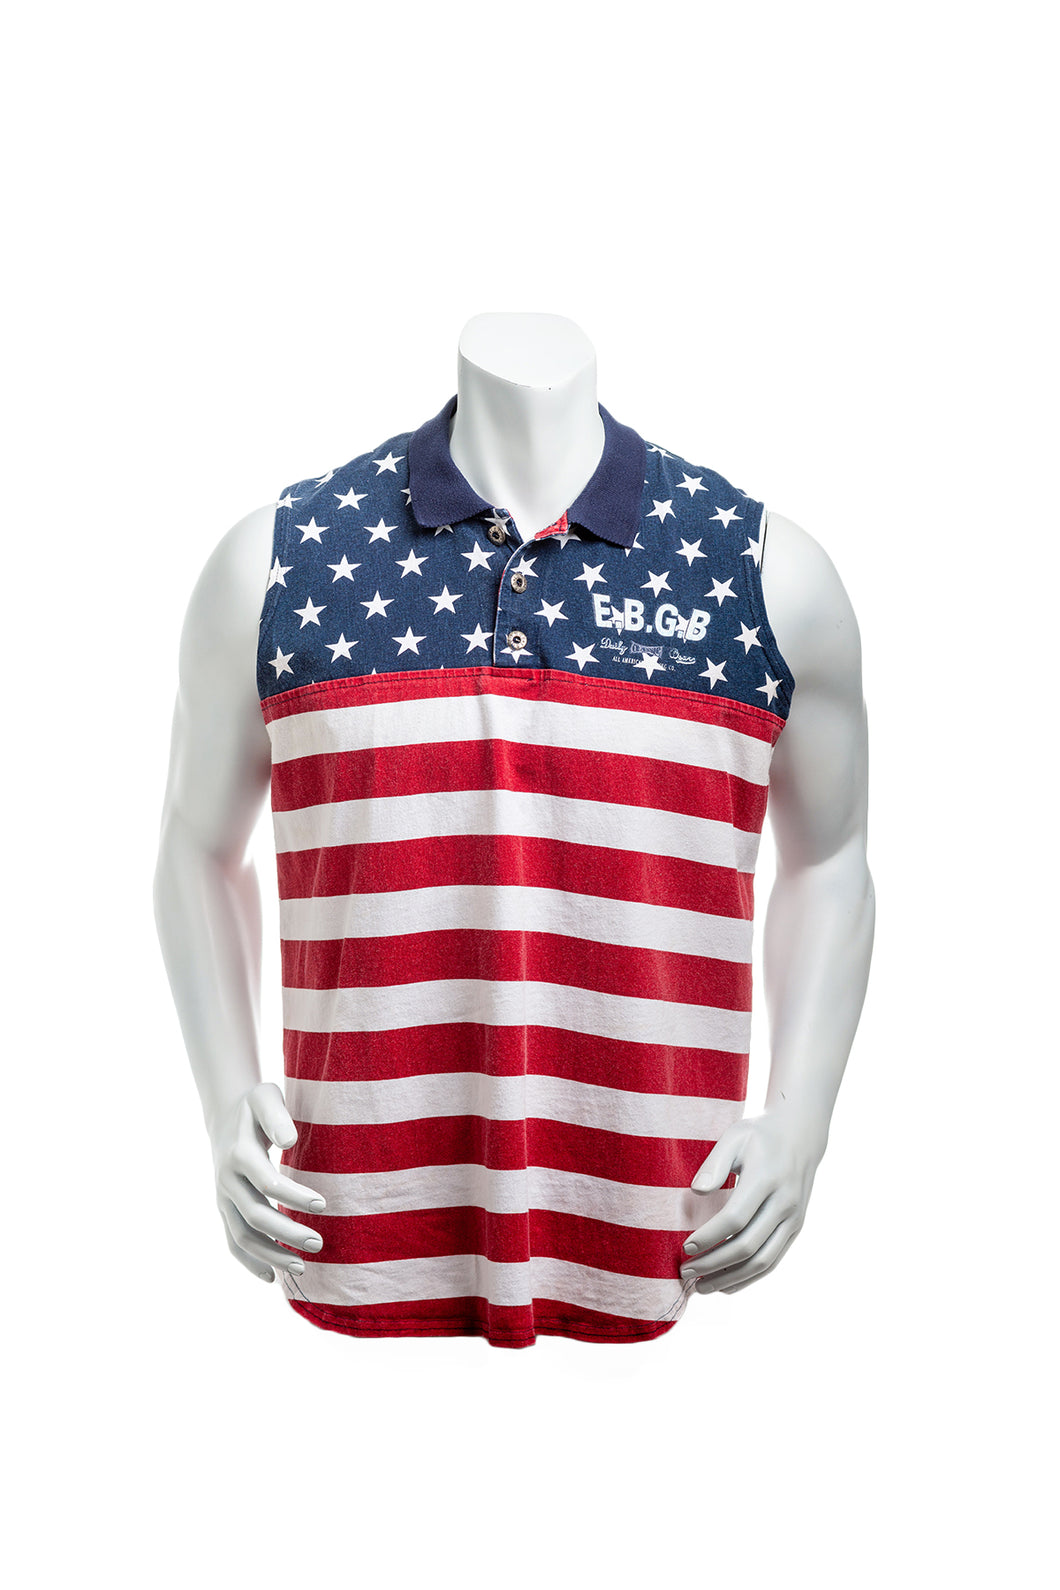 Vintage 90's E.B.G.B. American Flag Sleeveless Collared Shirt Men's Large